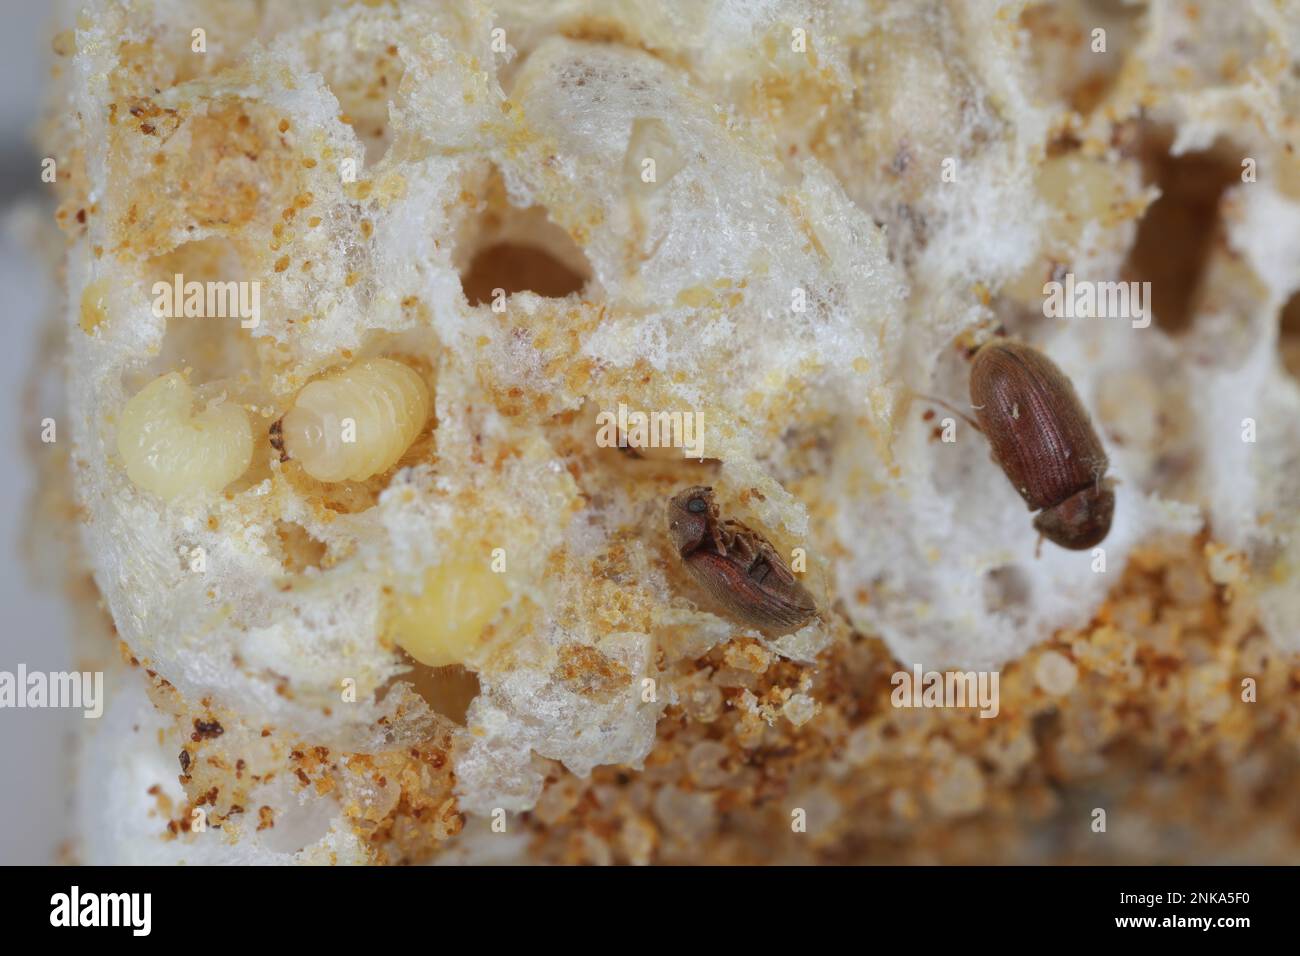 Biscuit, drugstore or bread beetle (Stegobium paniceum) larvae and adults - beetle stored product pest on cookie debris. Stock Photo